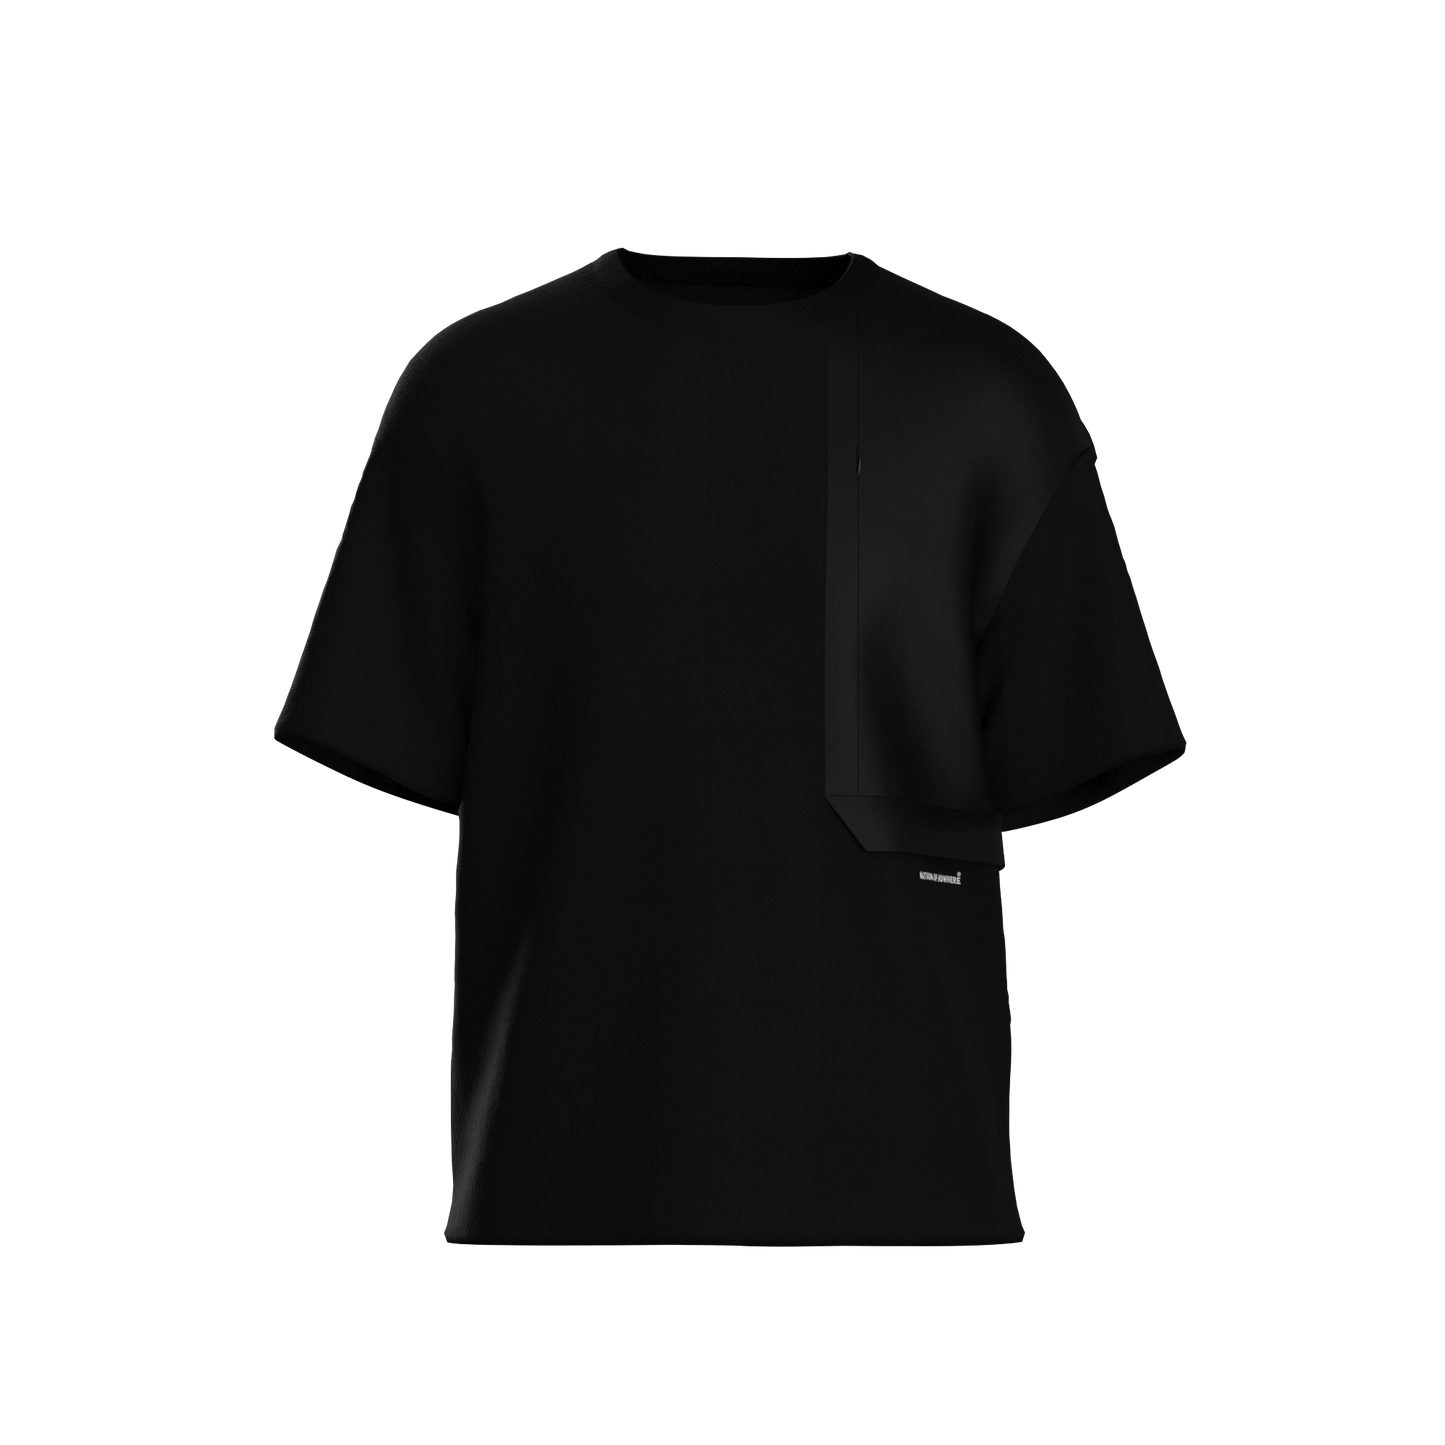 S1 Genesis : T Shirt